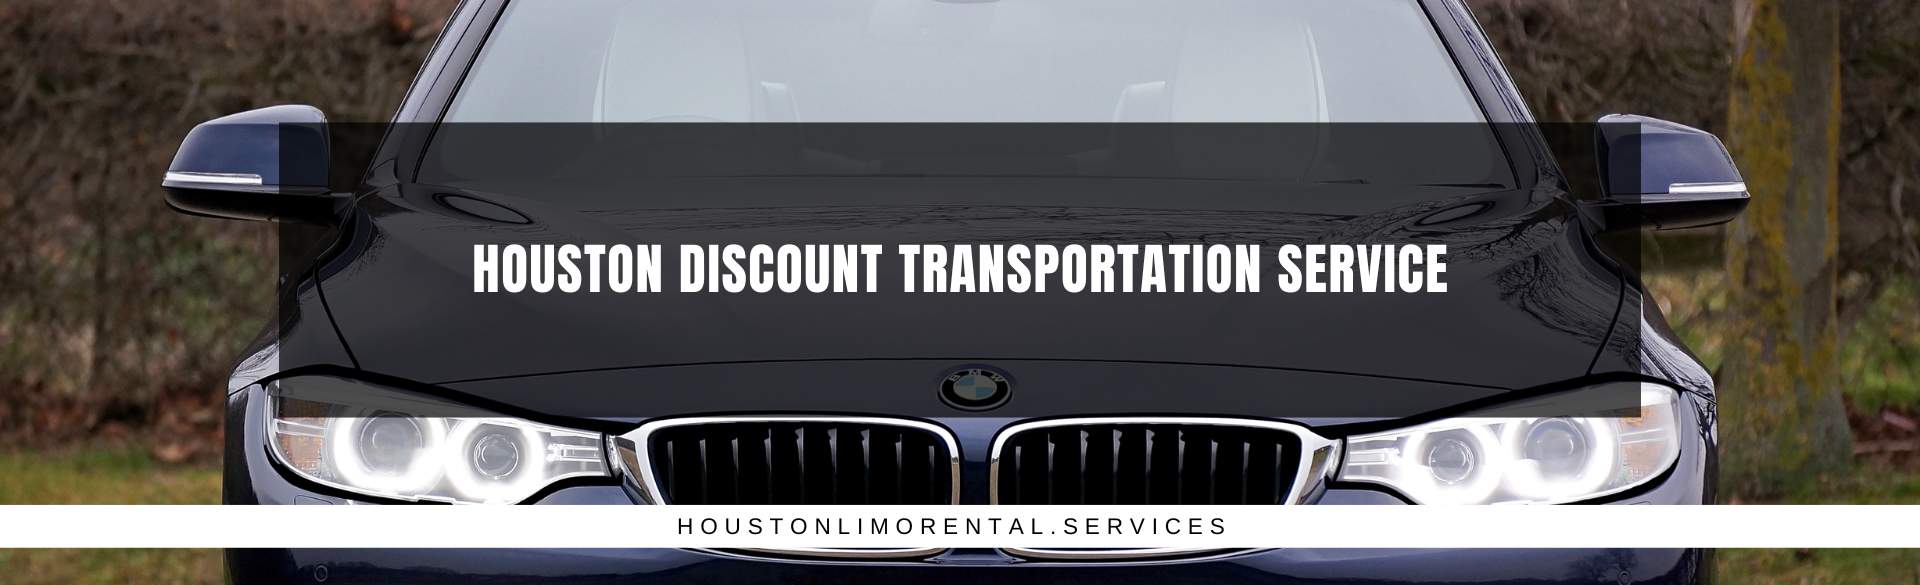 Houston Discount transportation service